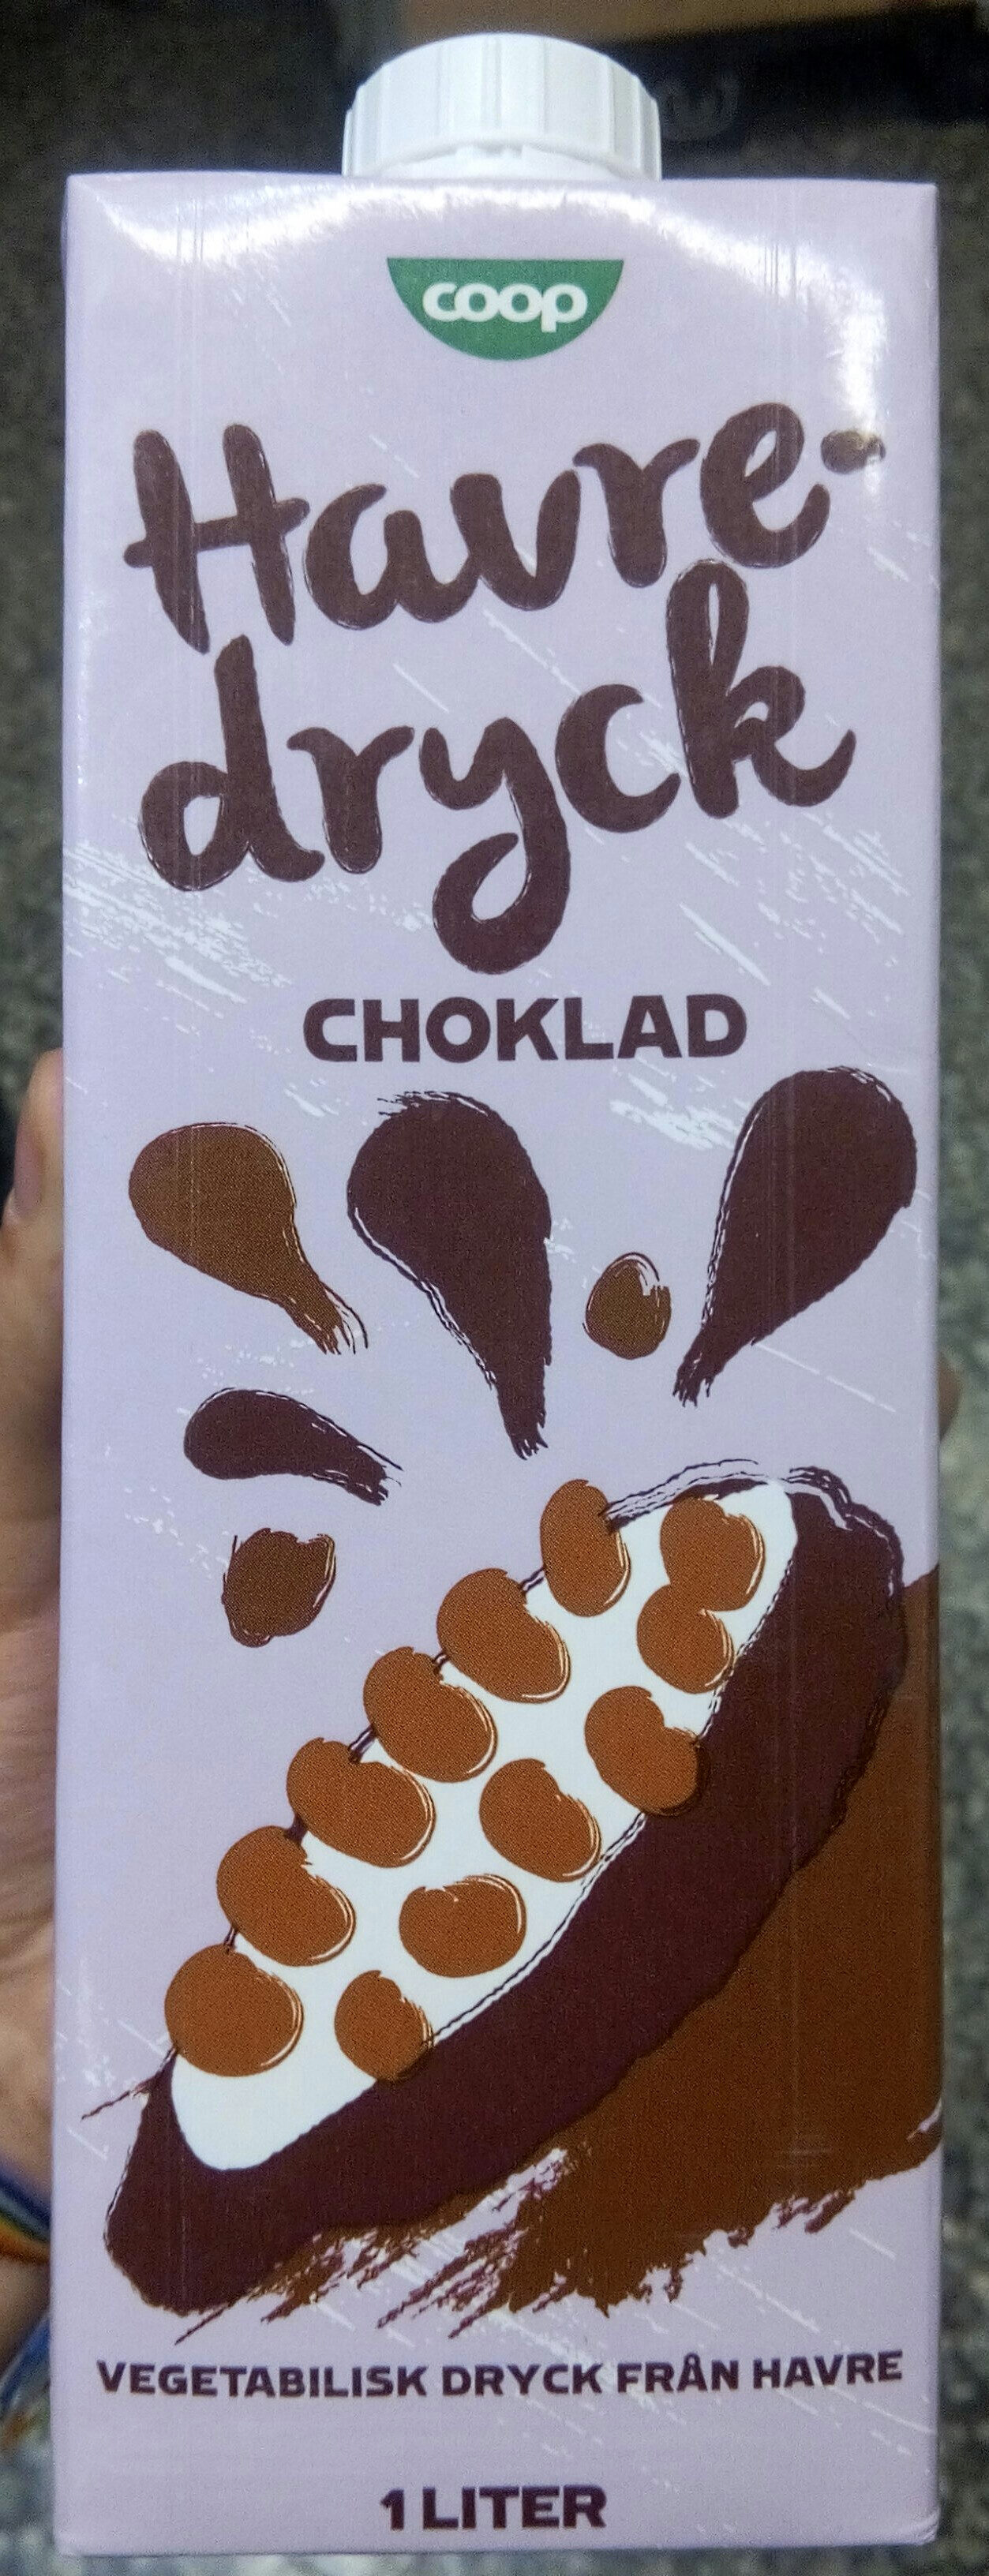 Havre-dryck choklad - Produkt - sv